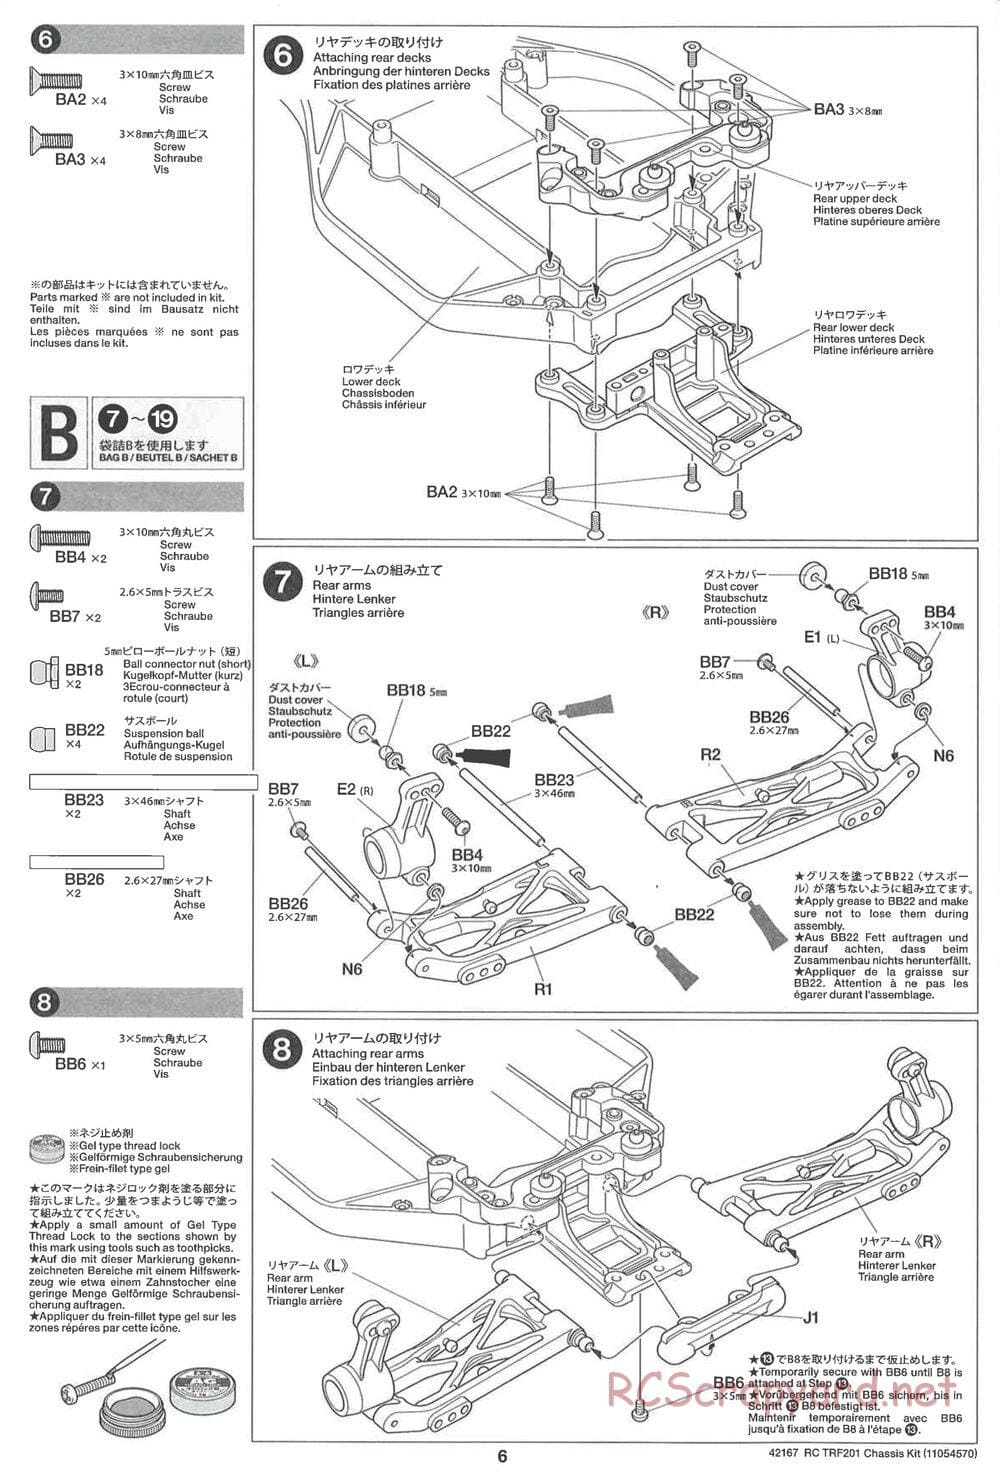 Tamiya - TRF201 Chassis - Manual - Page 6